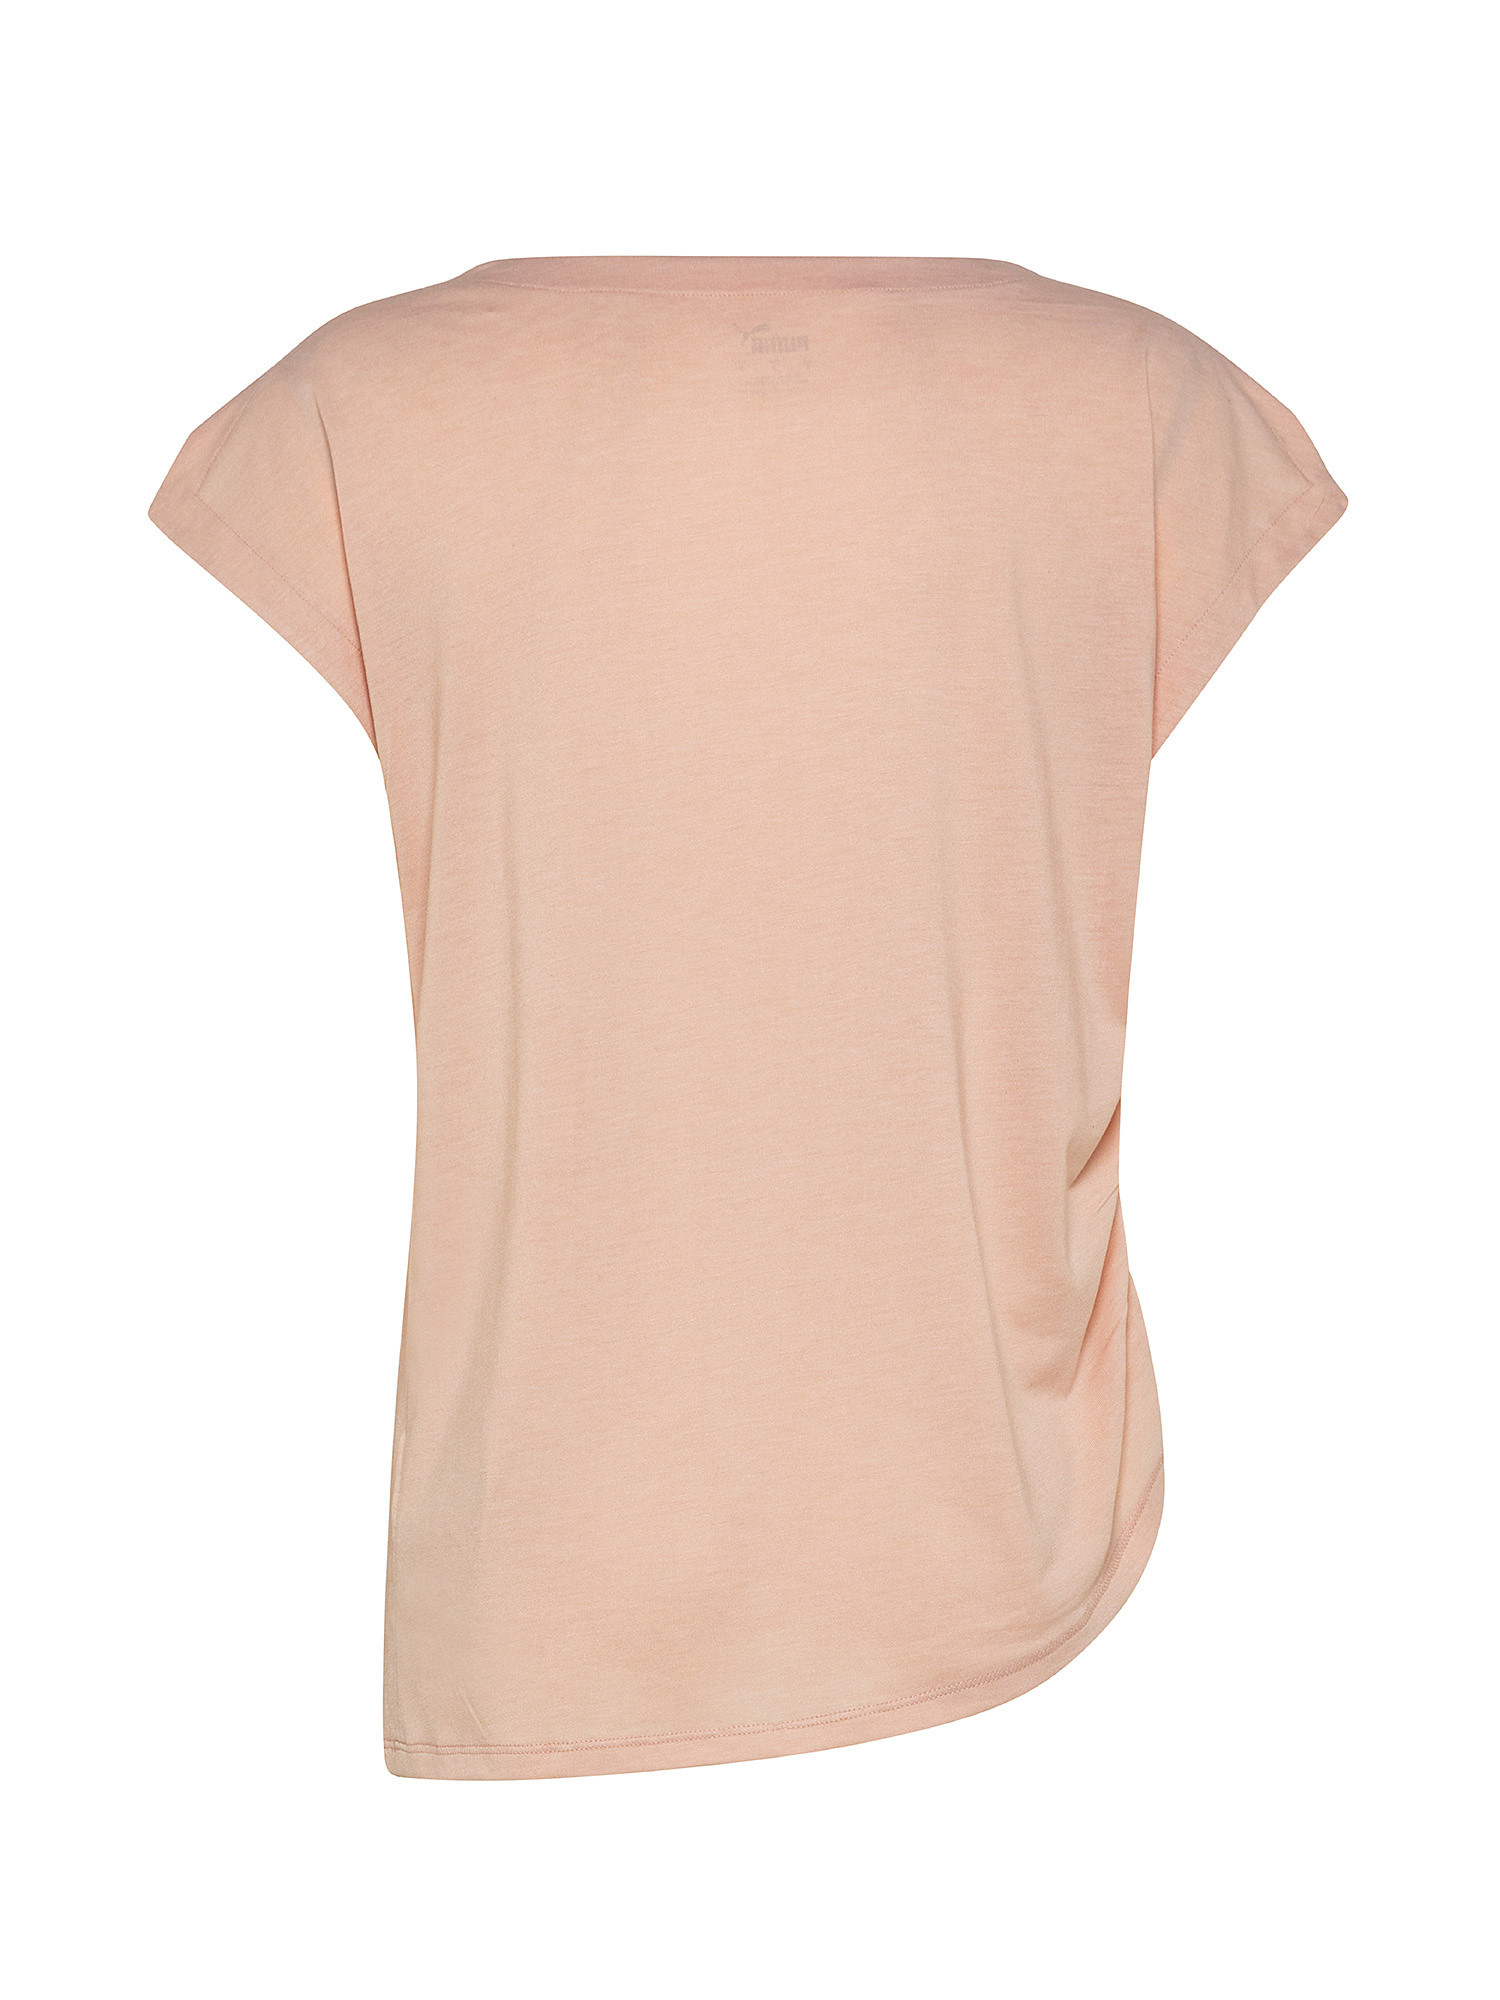 T-shirt asimmetrica, Rosa chiaro, large image number 1